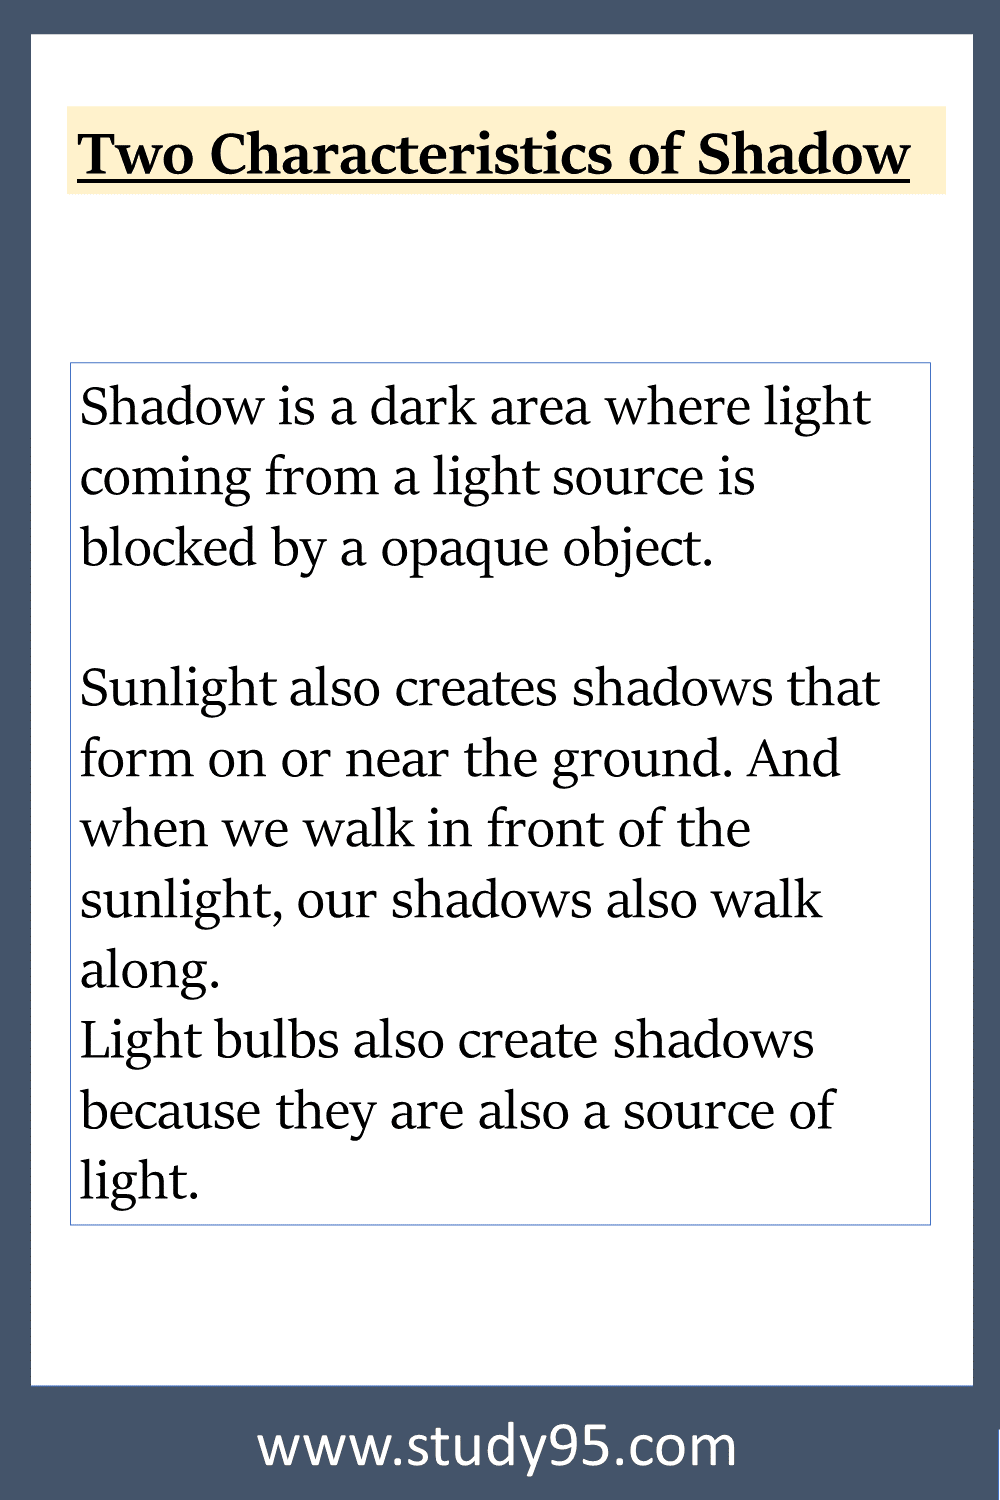 Write Characteristics of Shadow